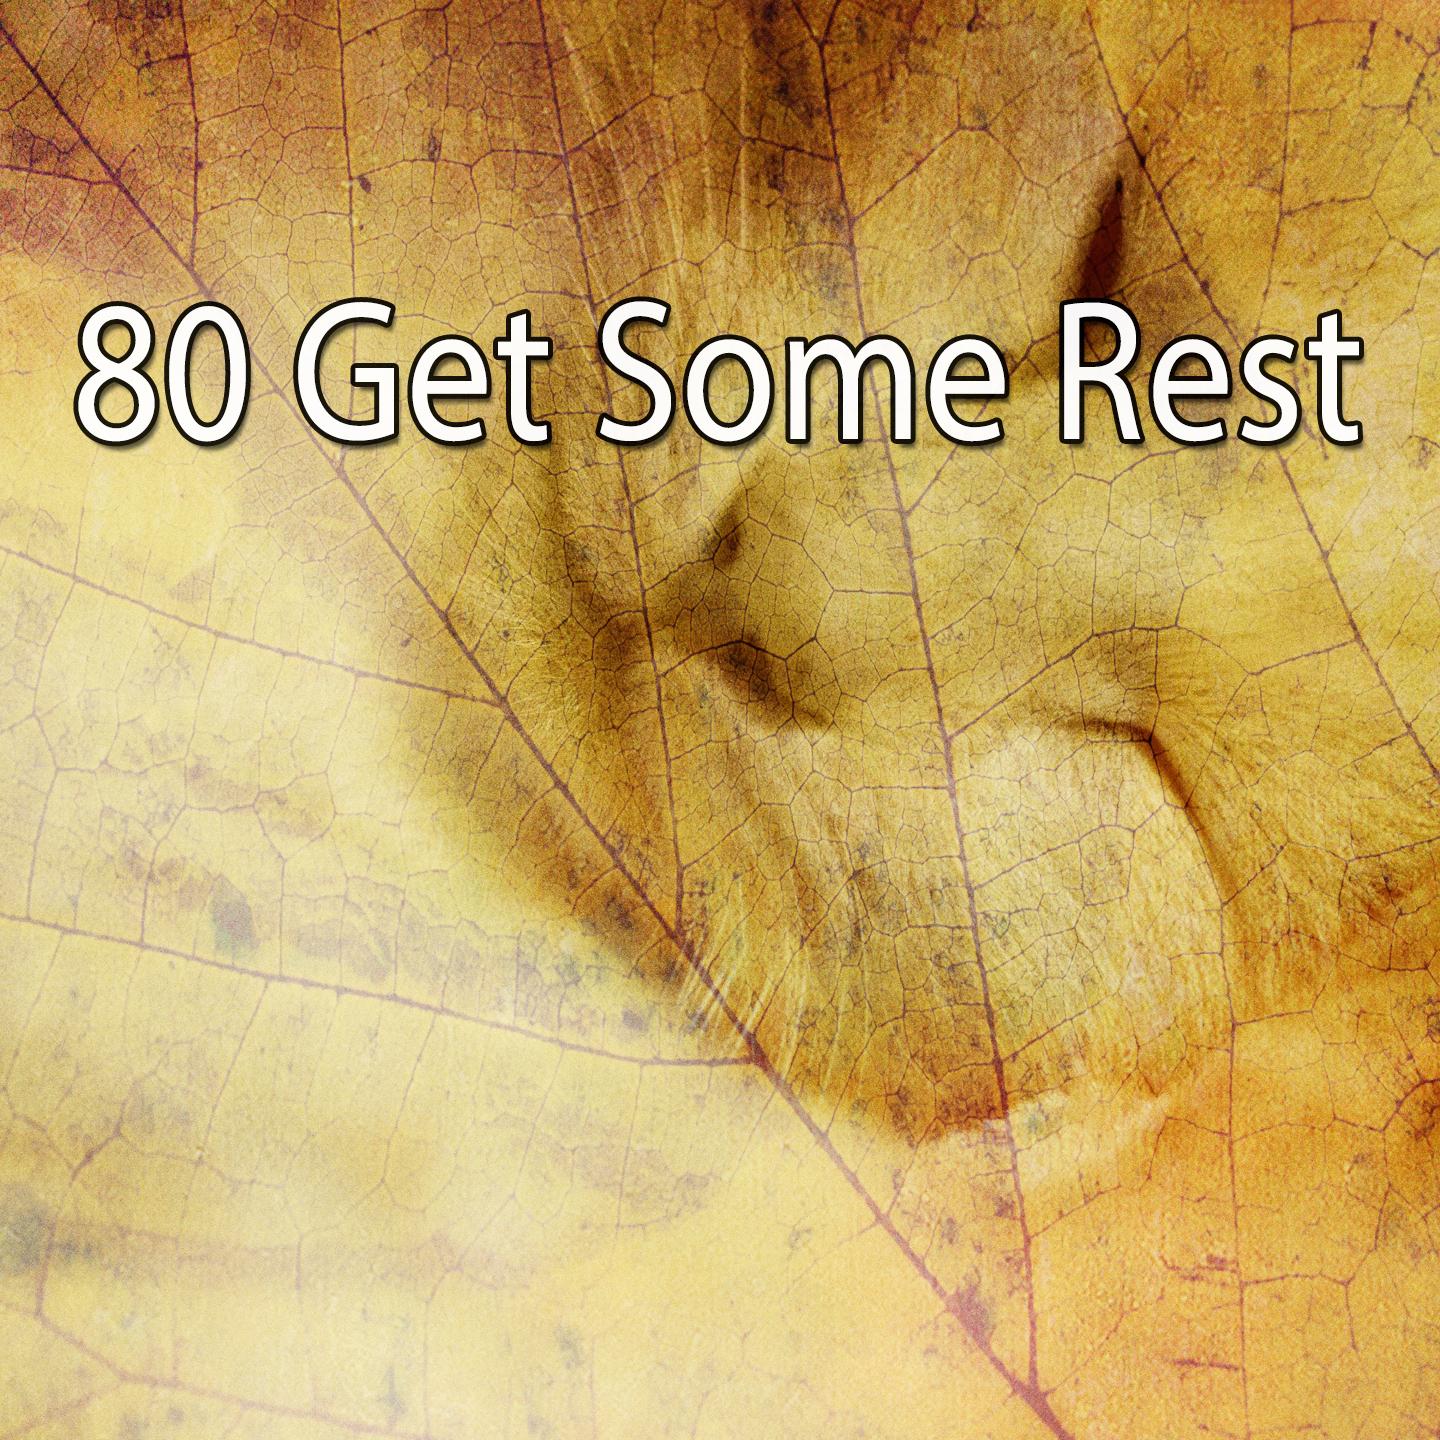 80 Get Some Rest